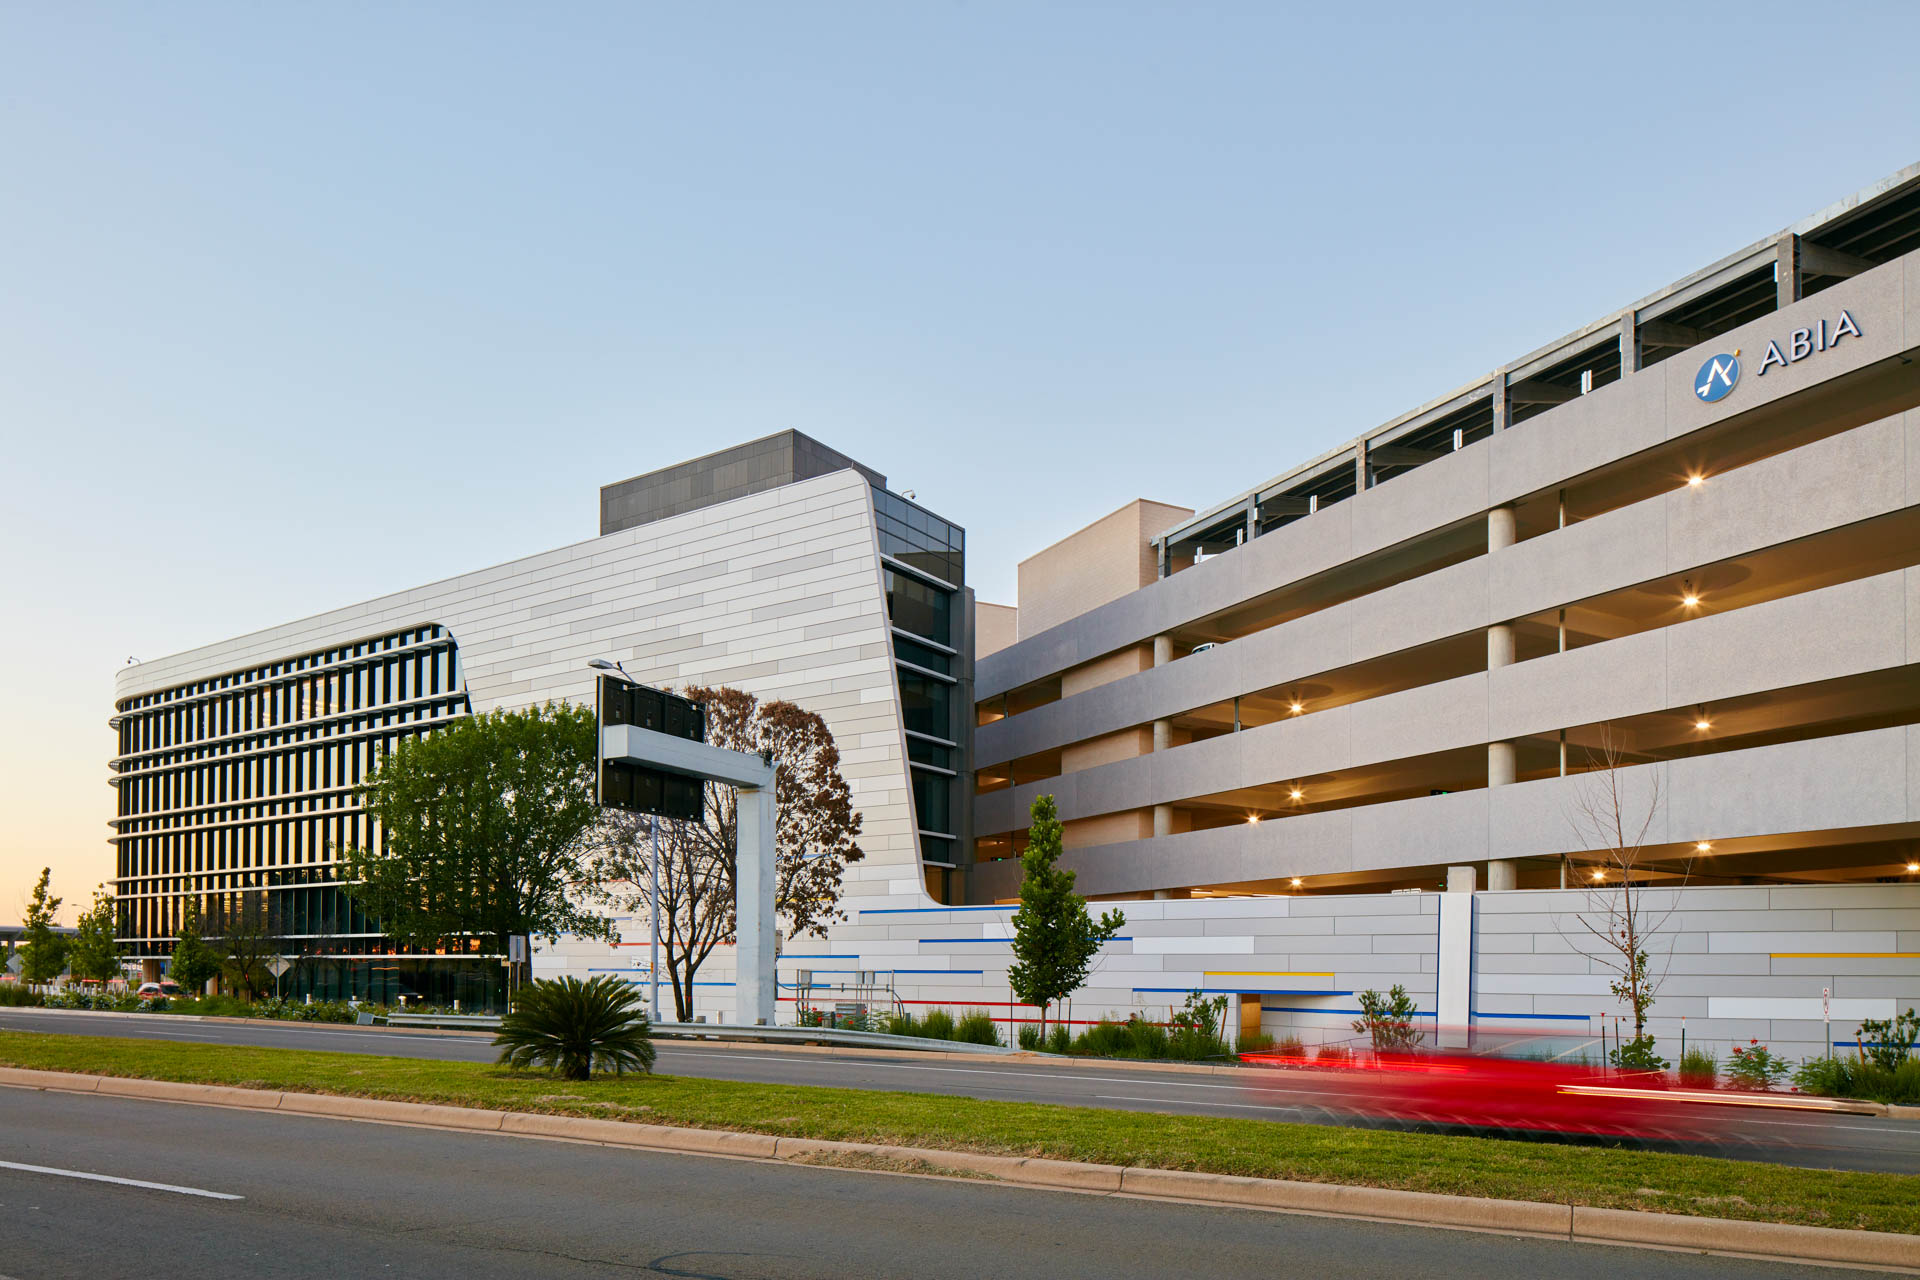 AUS Administration Building